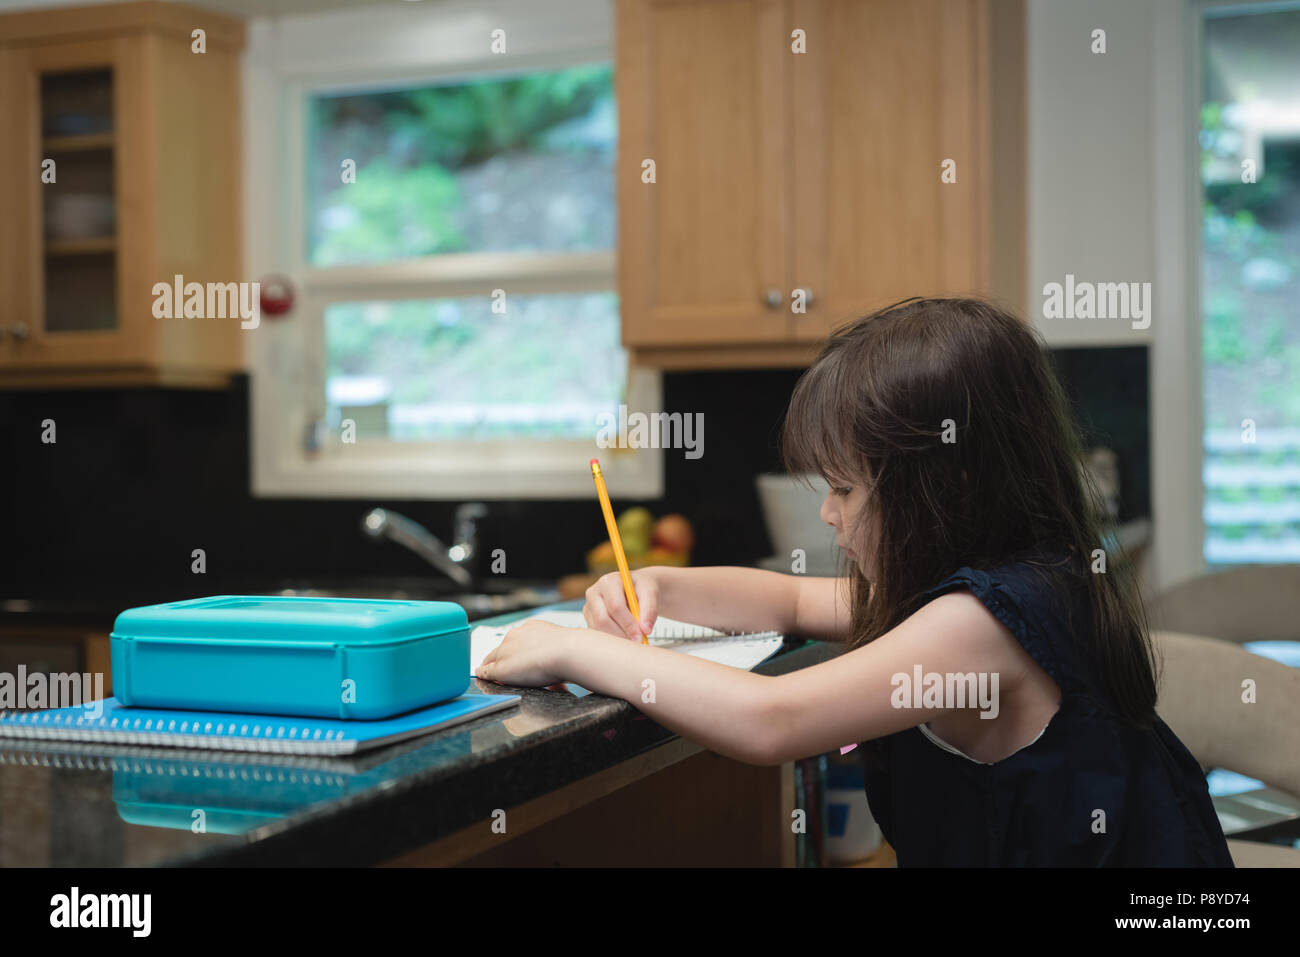 Girl doing homework at home Banque D'Images